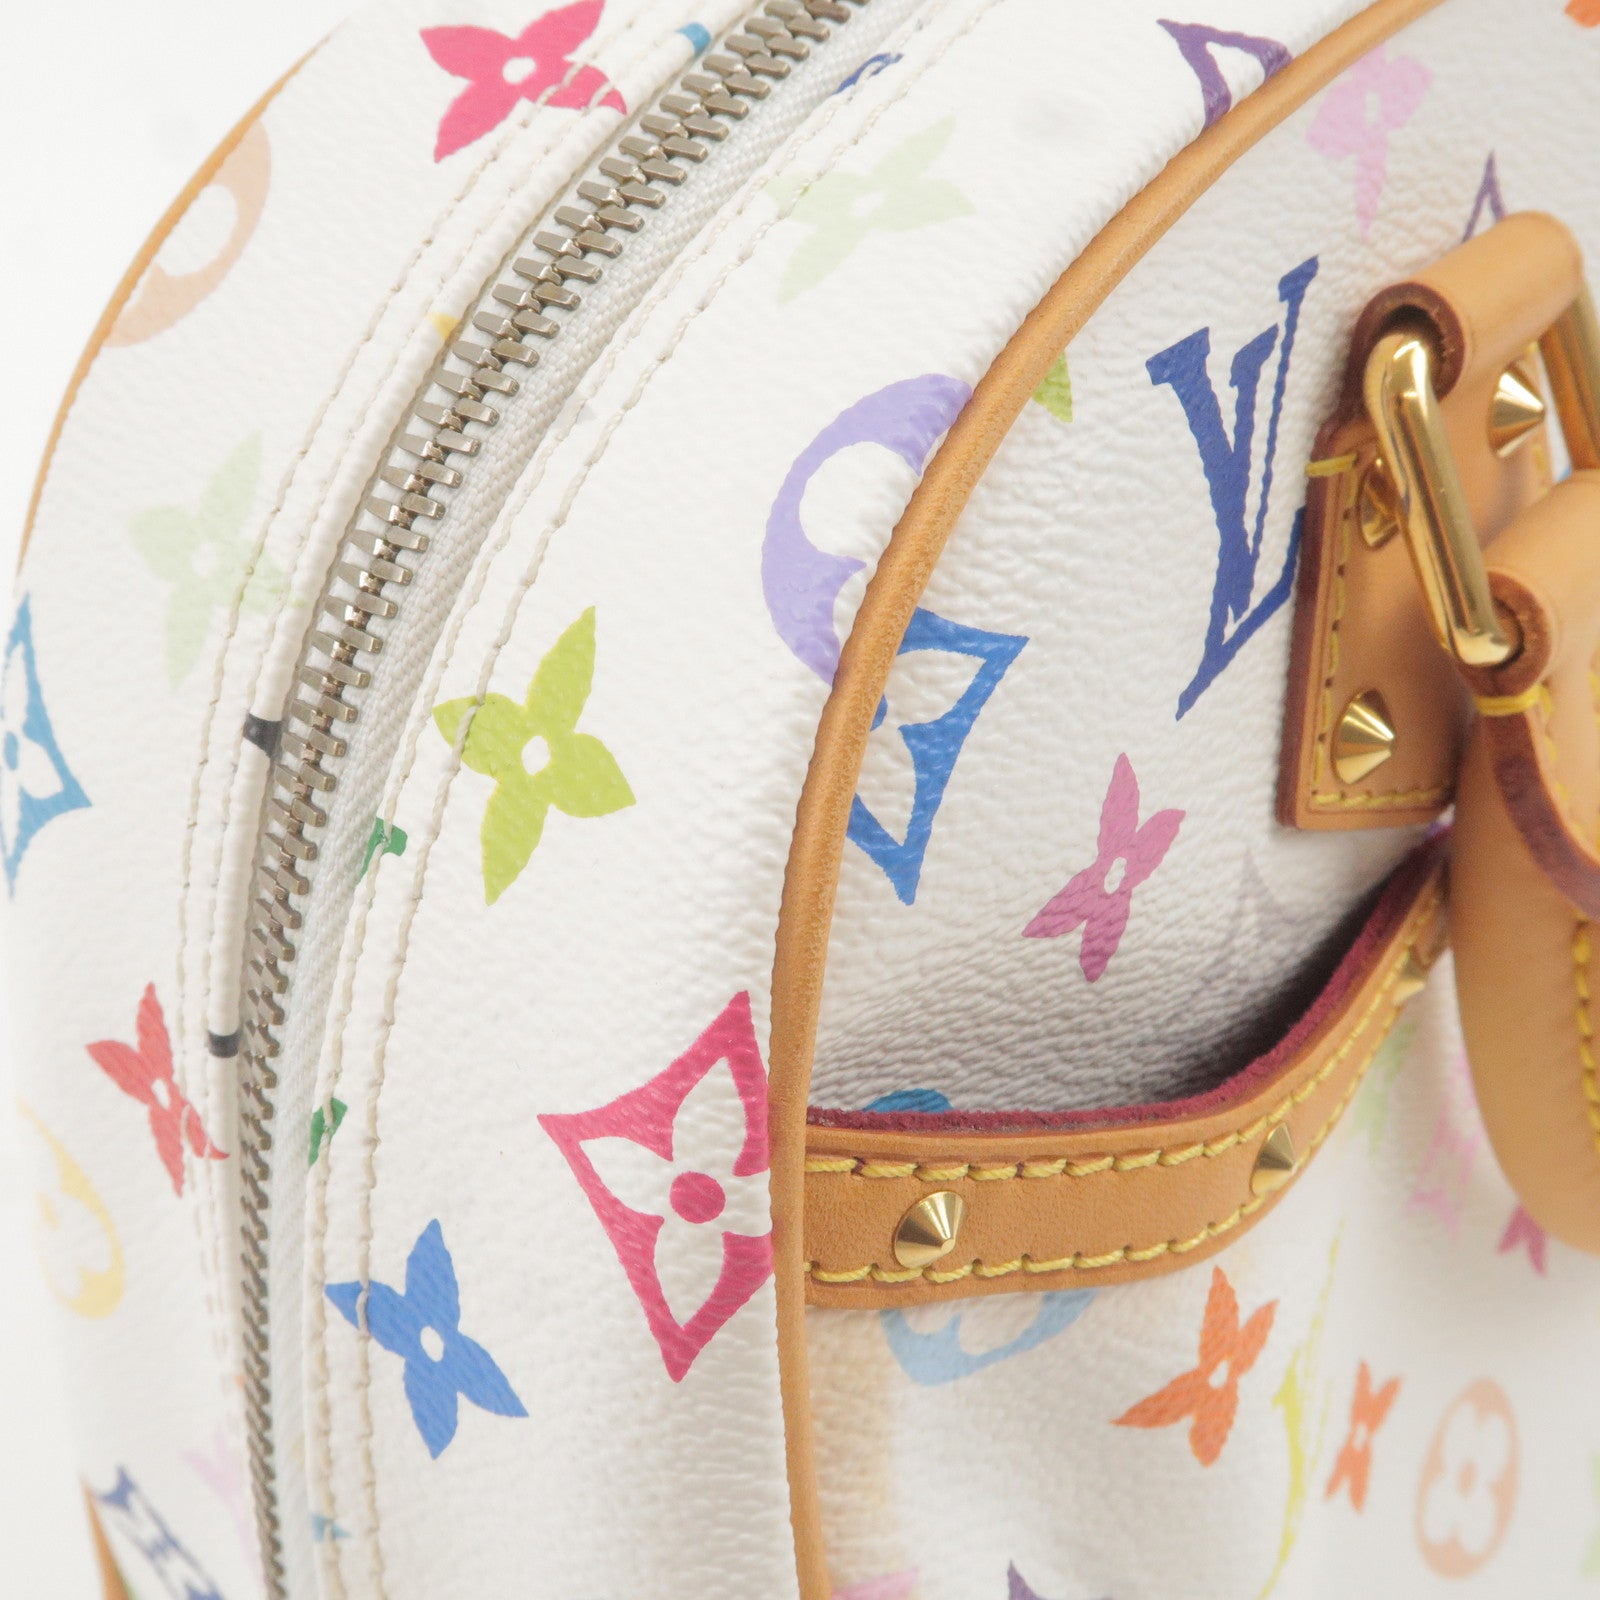 Papillon 26, Used & Preloved Louis Vuitton Handbag